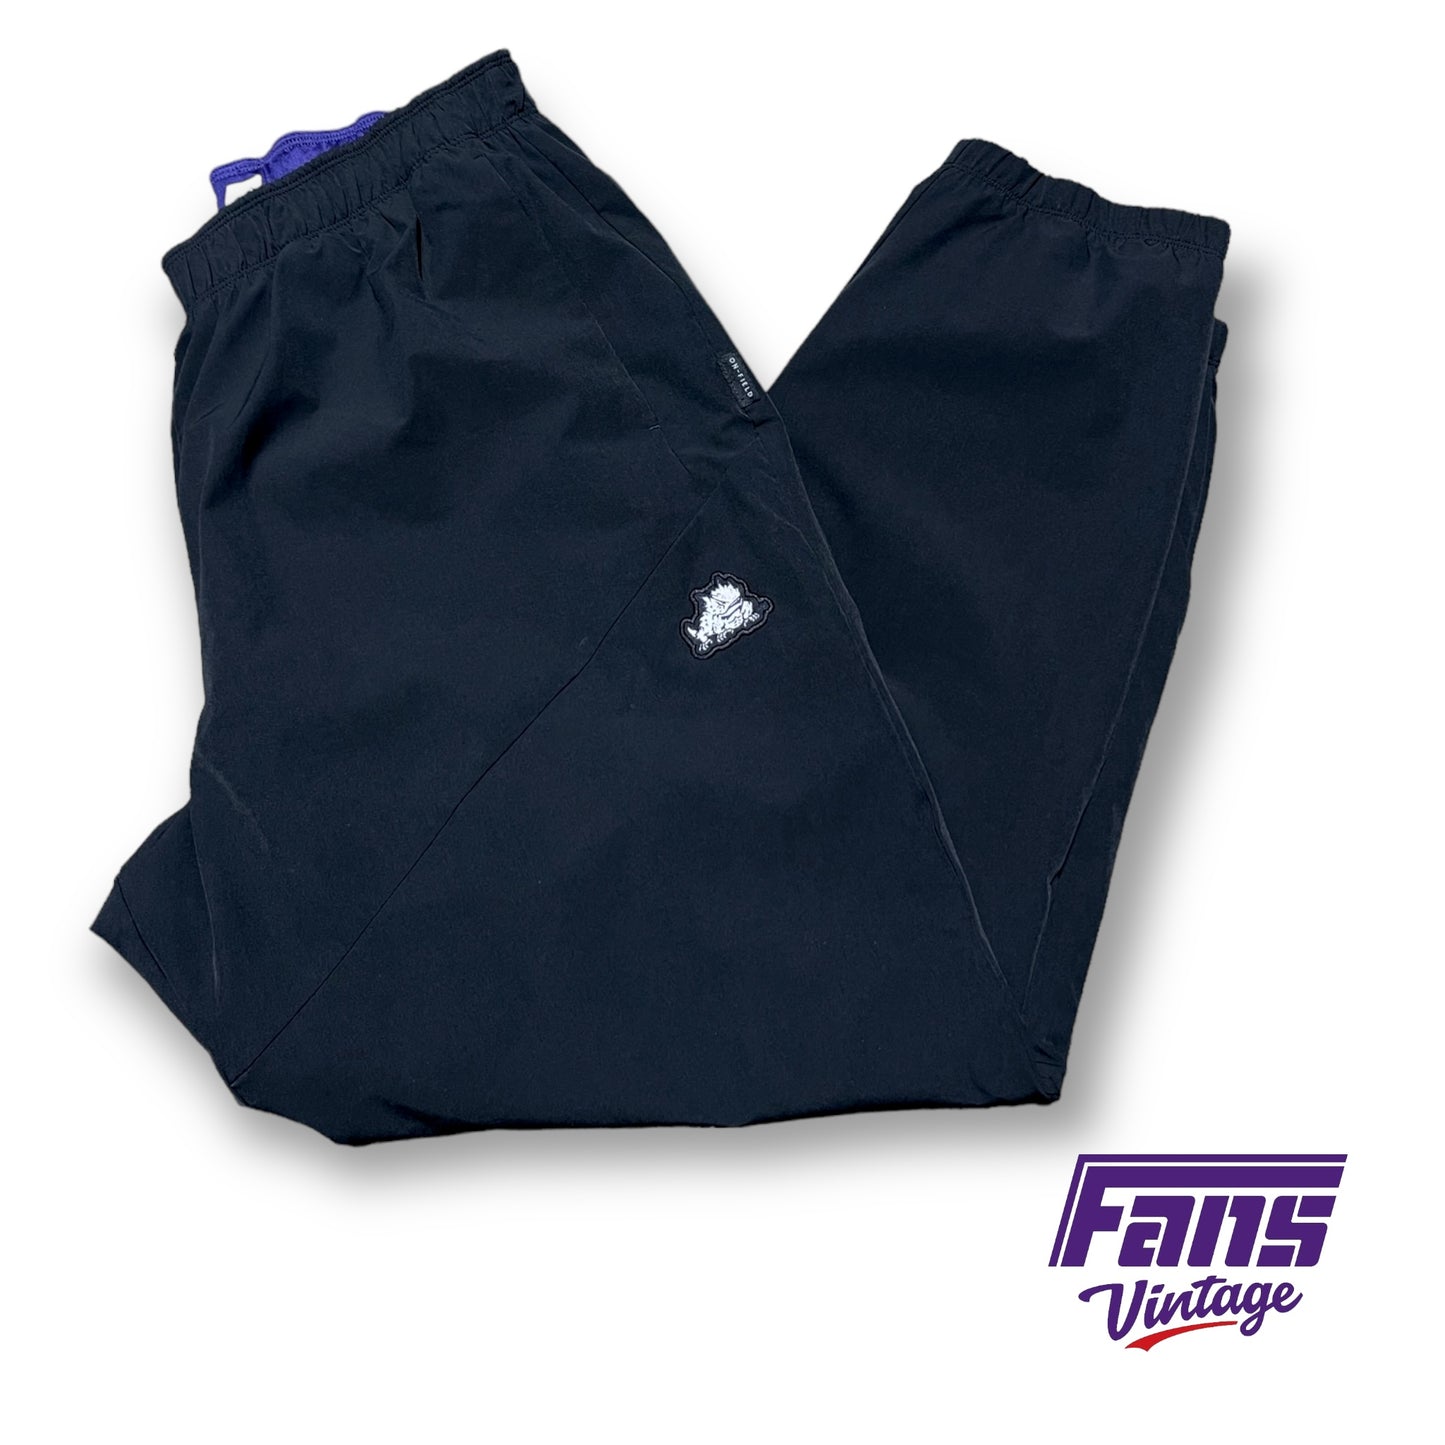 TCU Baseball Premium Nike Travel Set -“On Field” Edition Jacket and Pants